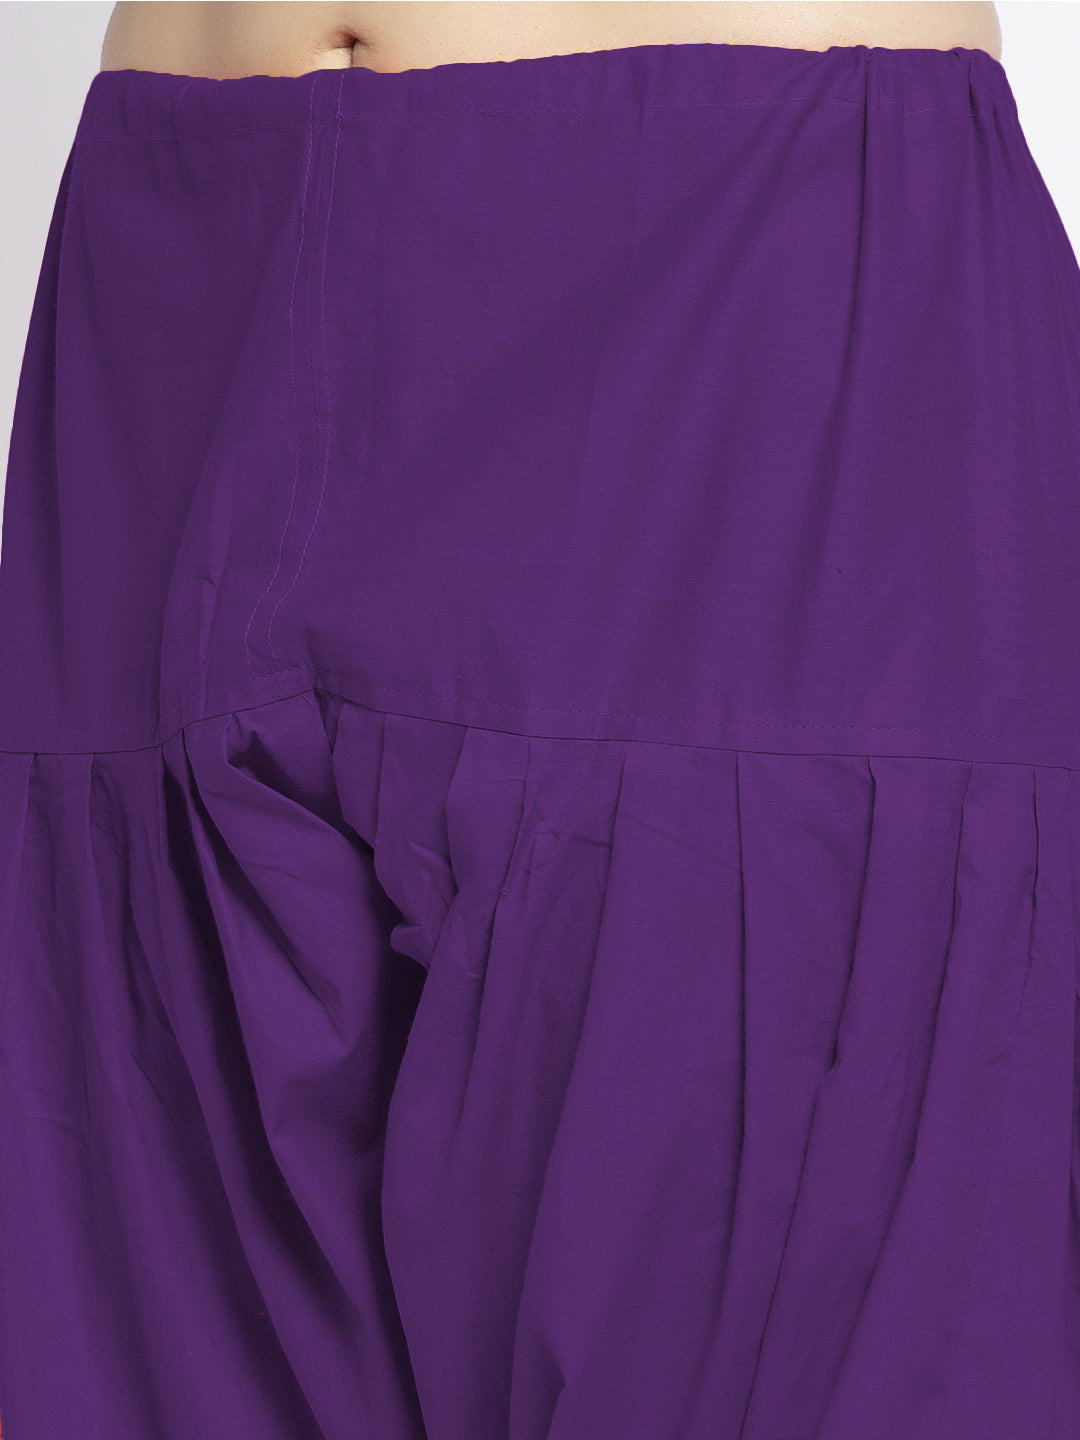 Purple Solid Cotton Salwar Pant